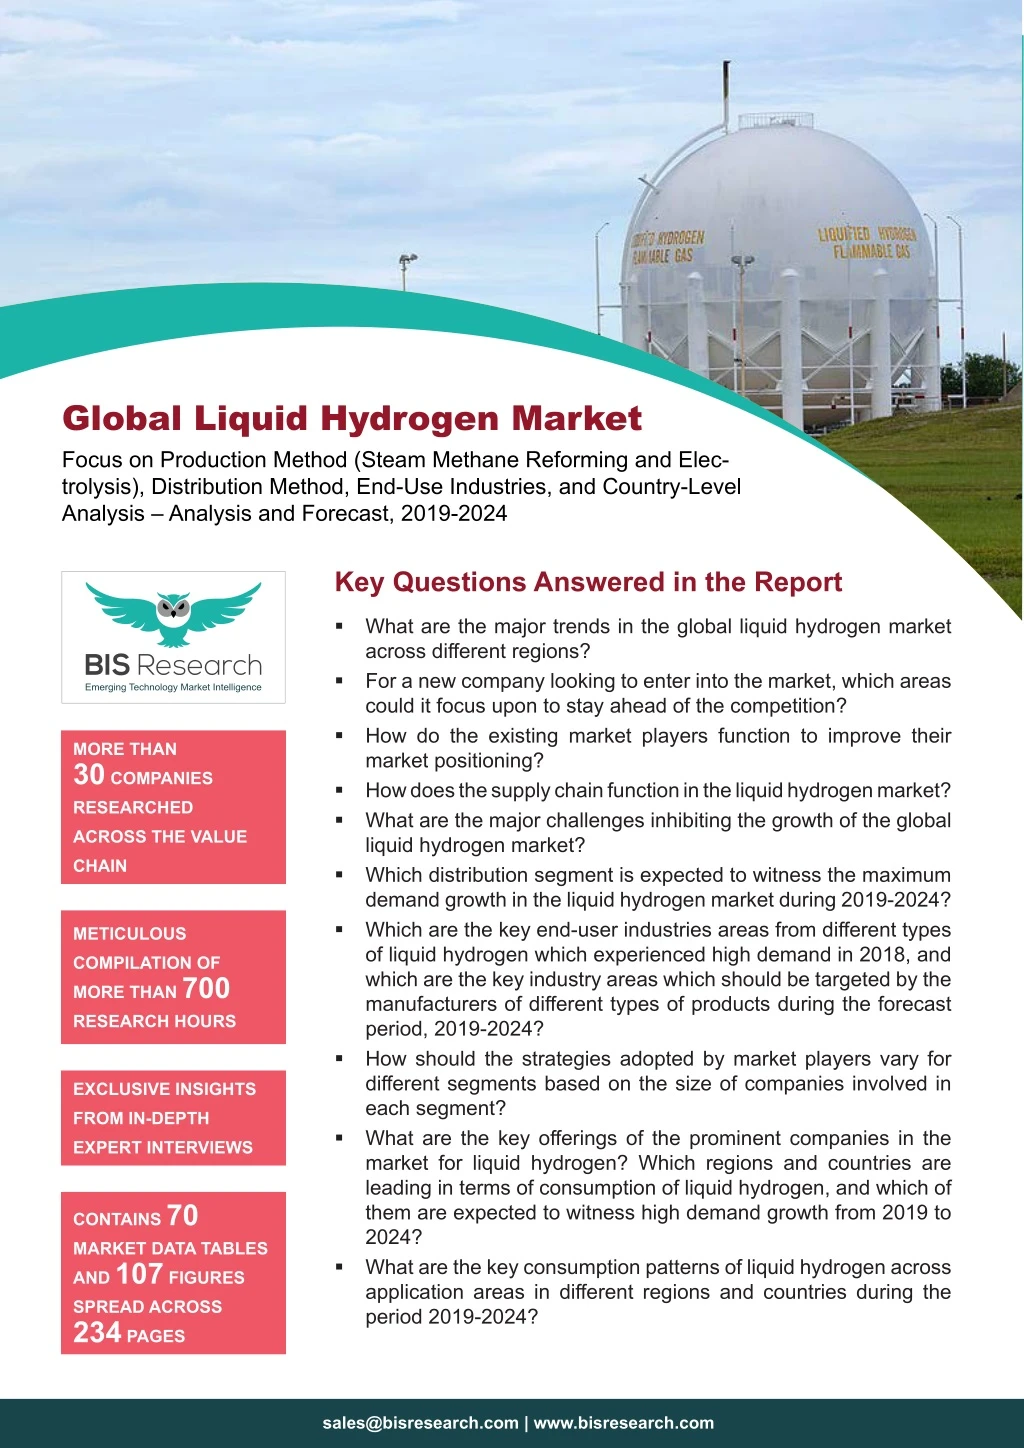 global liquid hydrogen market focus on production